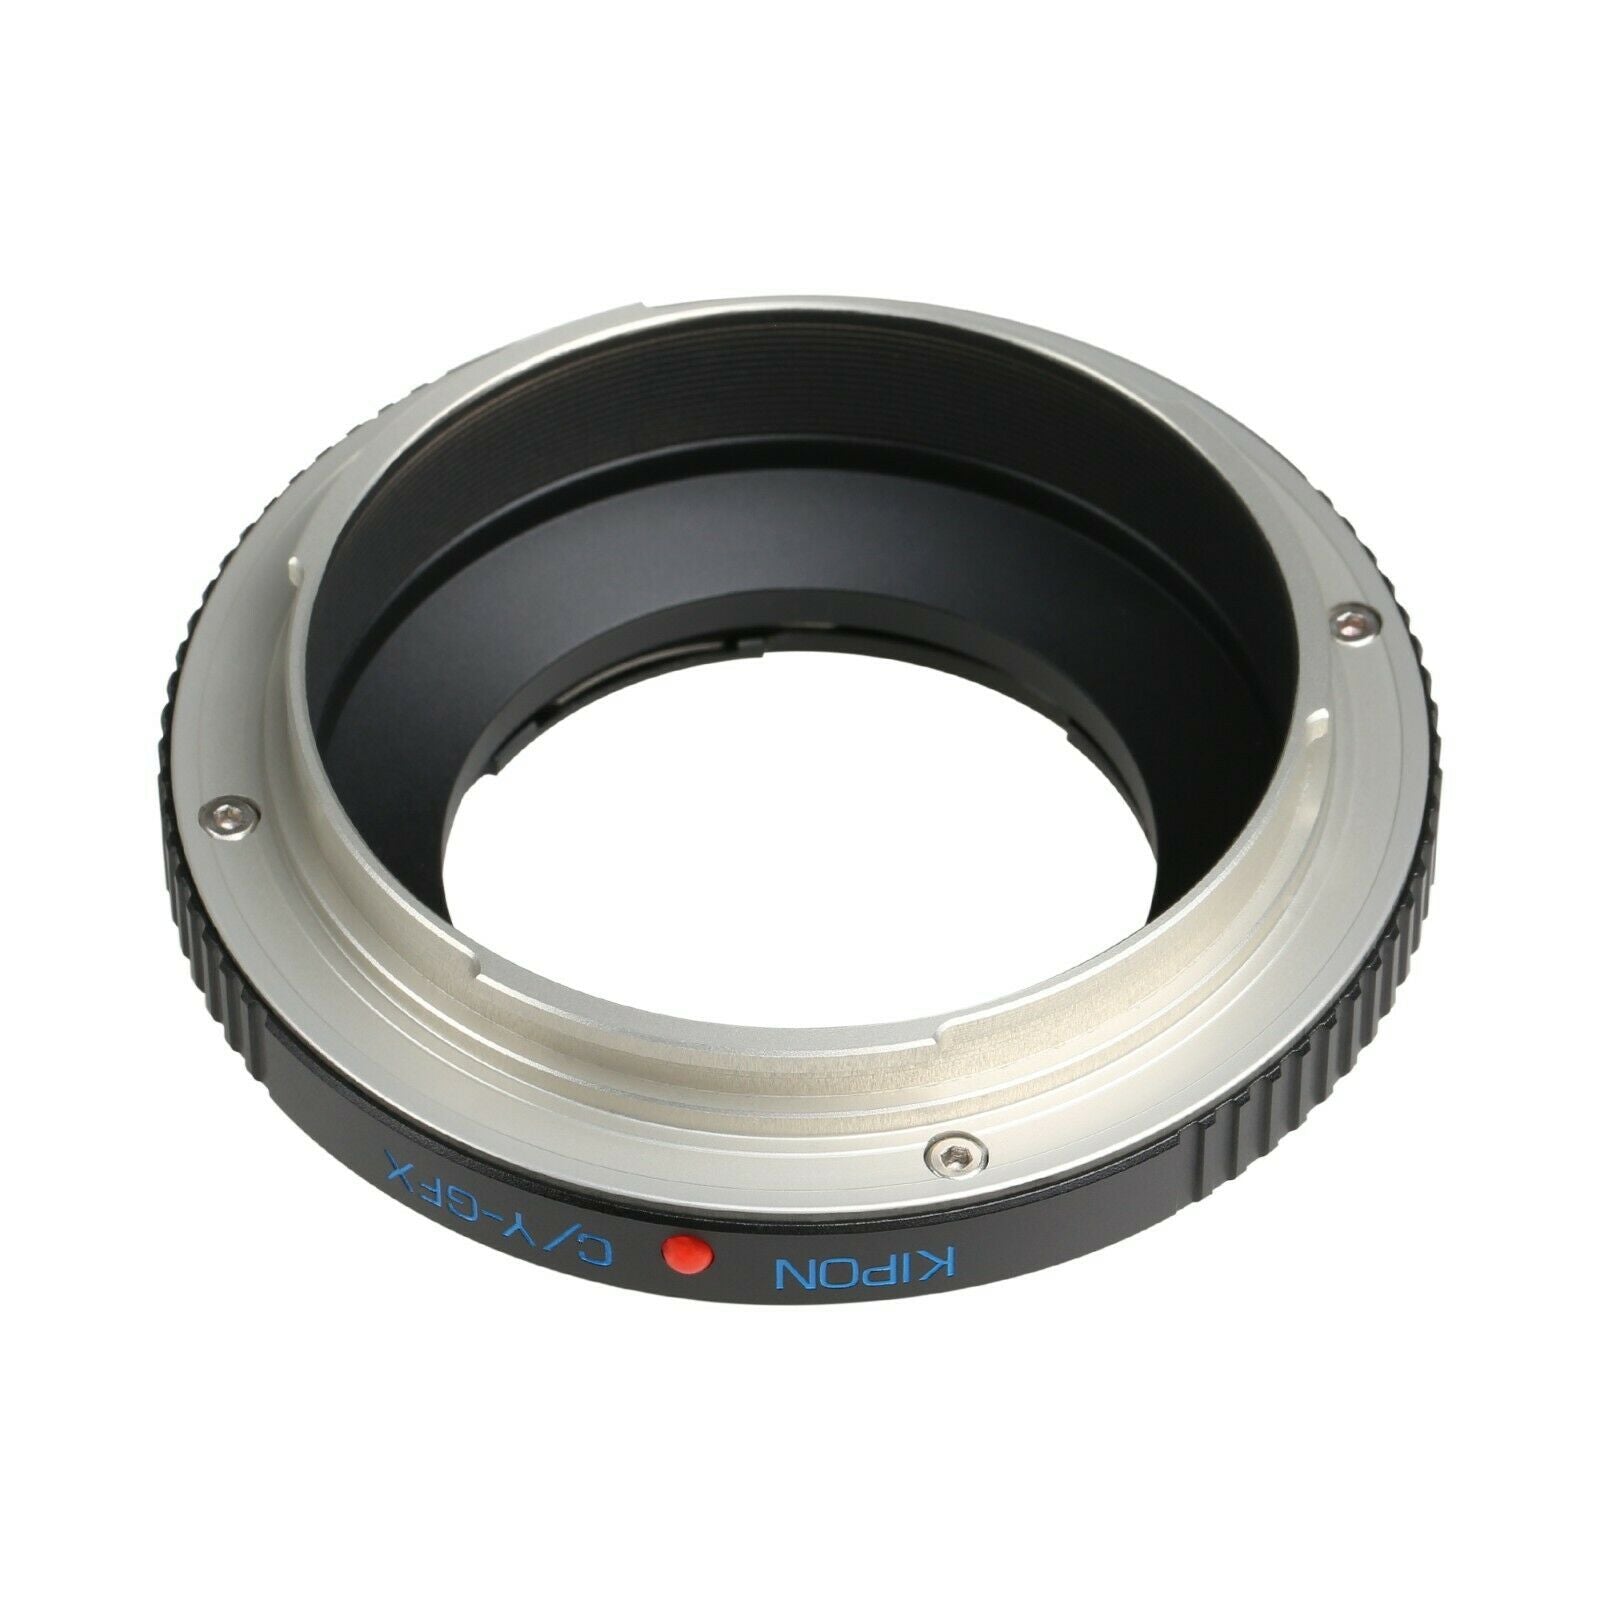 Kipon C/Y-GFX lens adapter for Contax Yashica mount C/Y lens to Fujifilm G-Mount Fuji GFX medium format mirrorless camera Pro Adapter - GFX 50S 100S